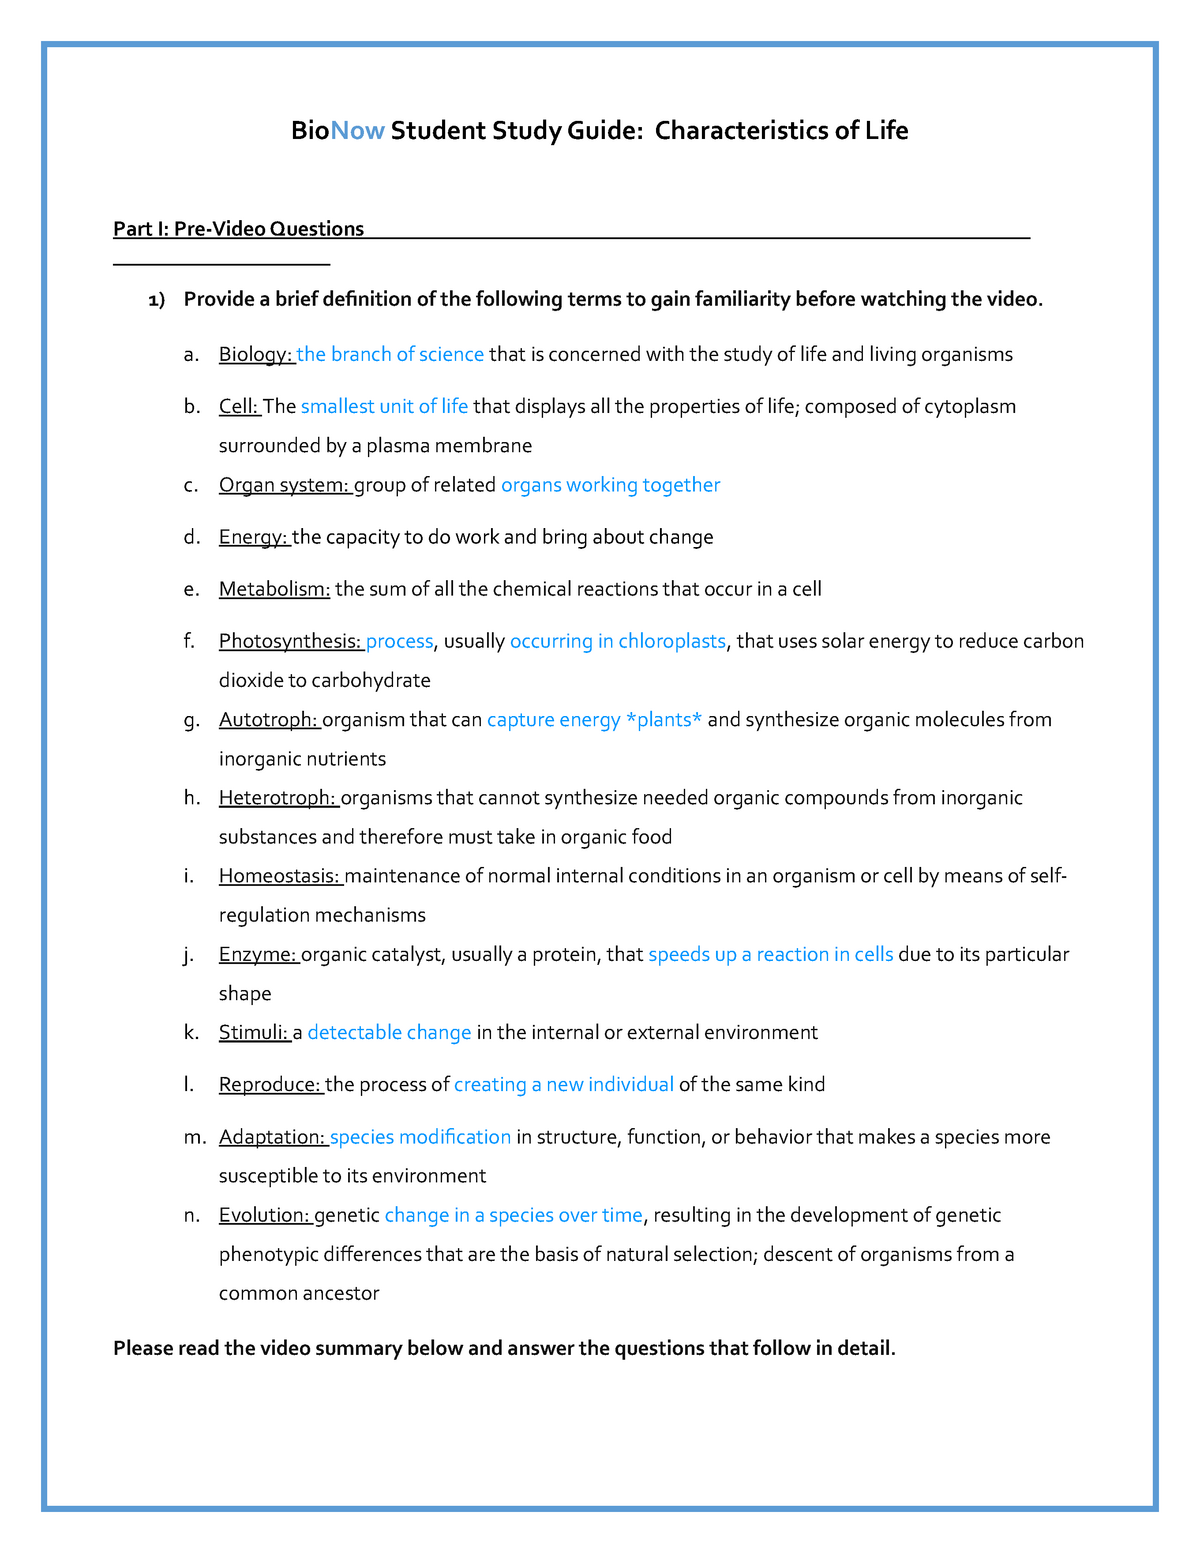 Bio Now Characteristics of Life Notes - BioNow Student Study Guide Within Characteristics Of Life Worksheet